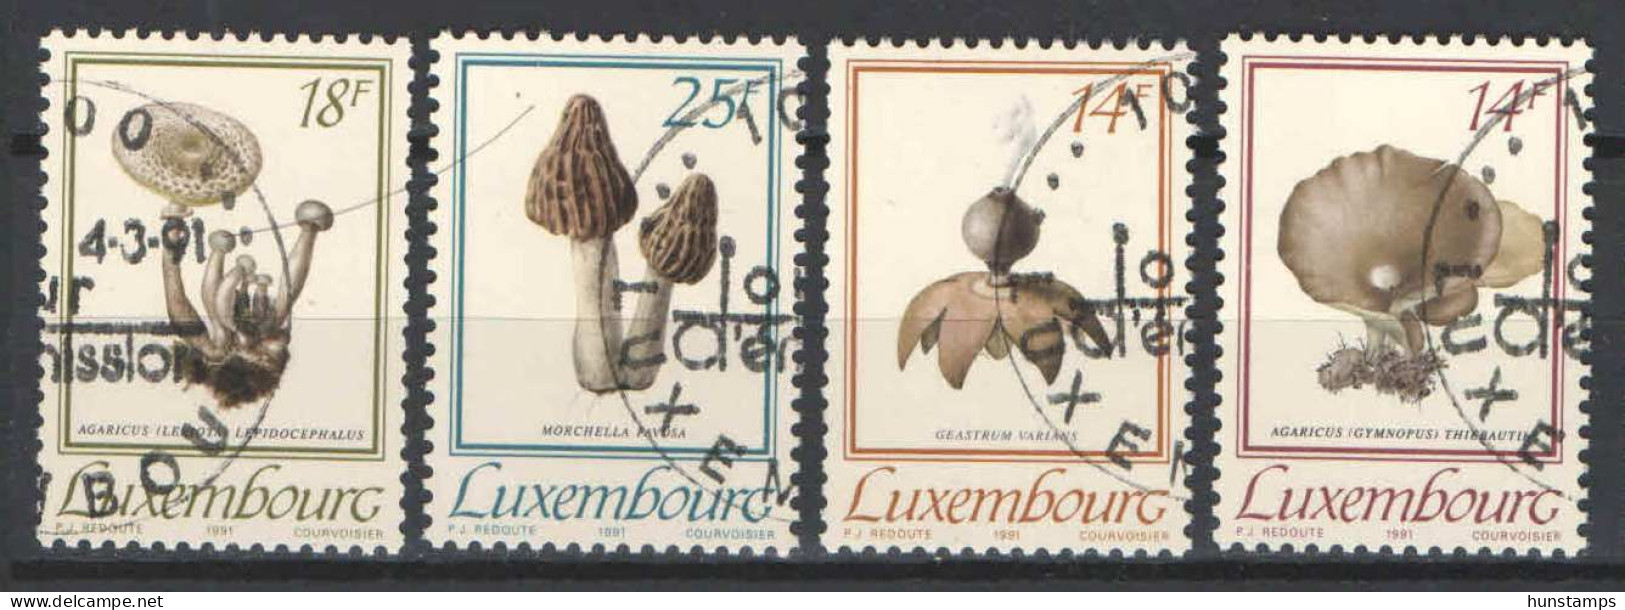 Luxembourg 1991. Mushrooms Nice Set, Used - Gebruikt